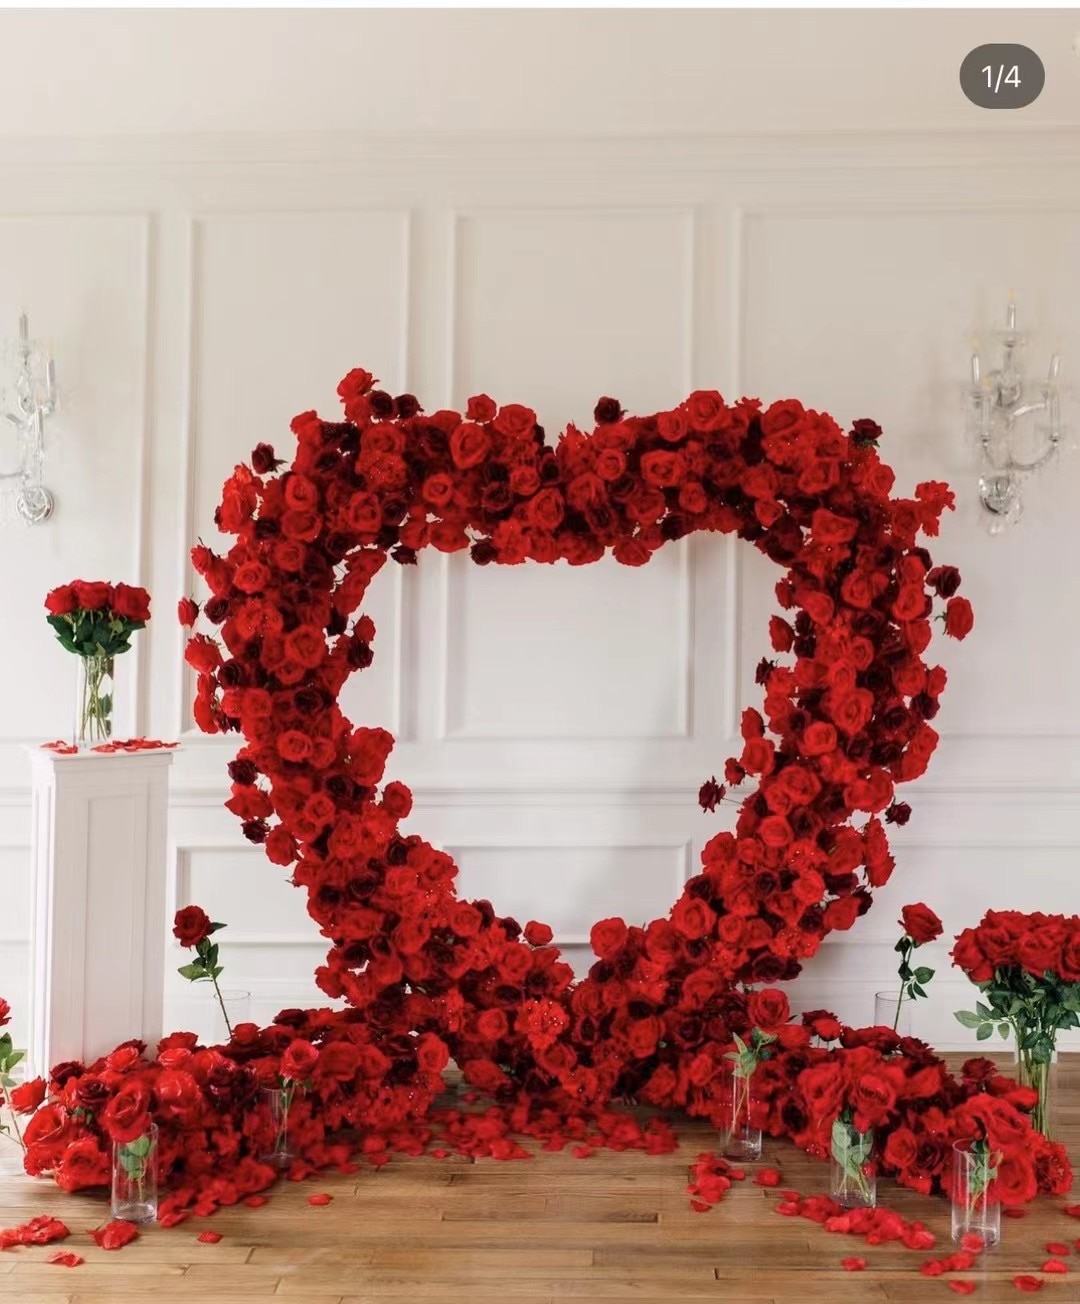 Symbolism of roses in weddings